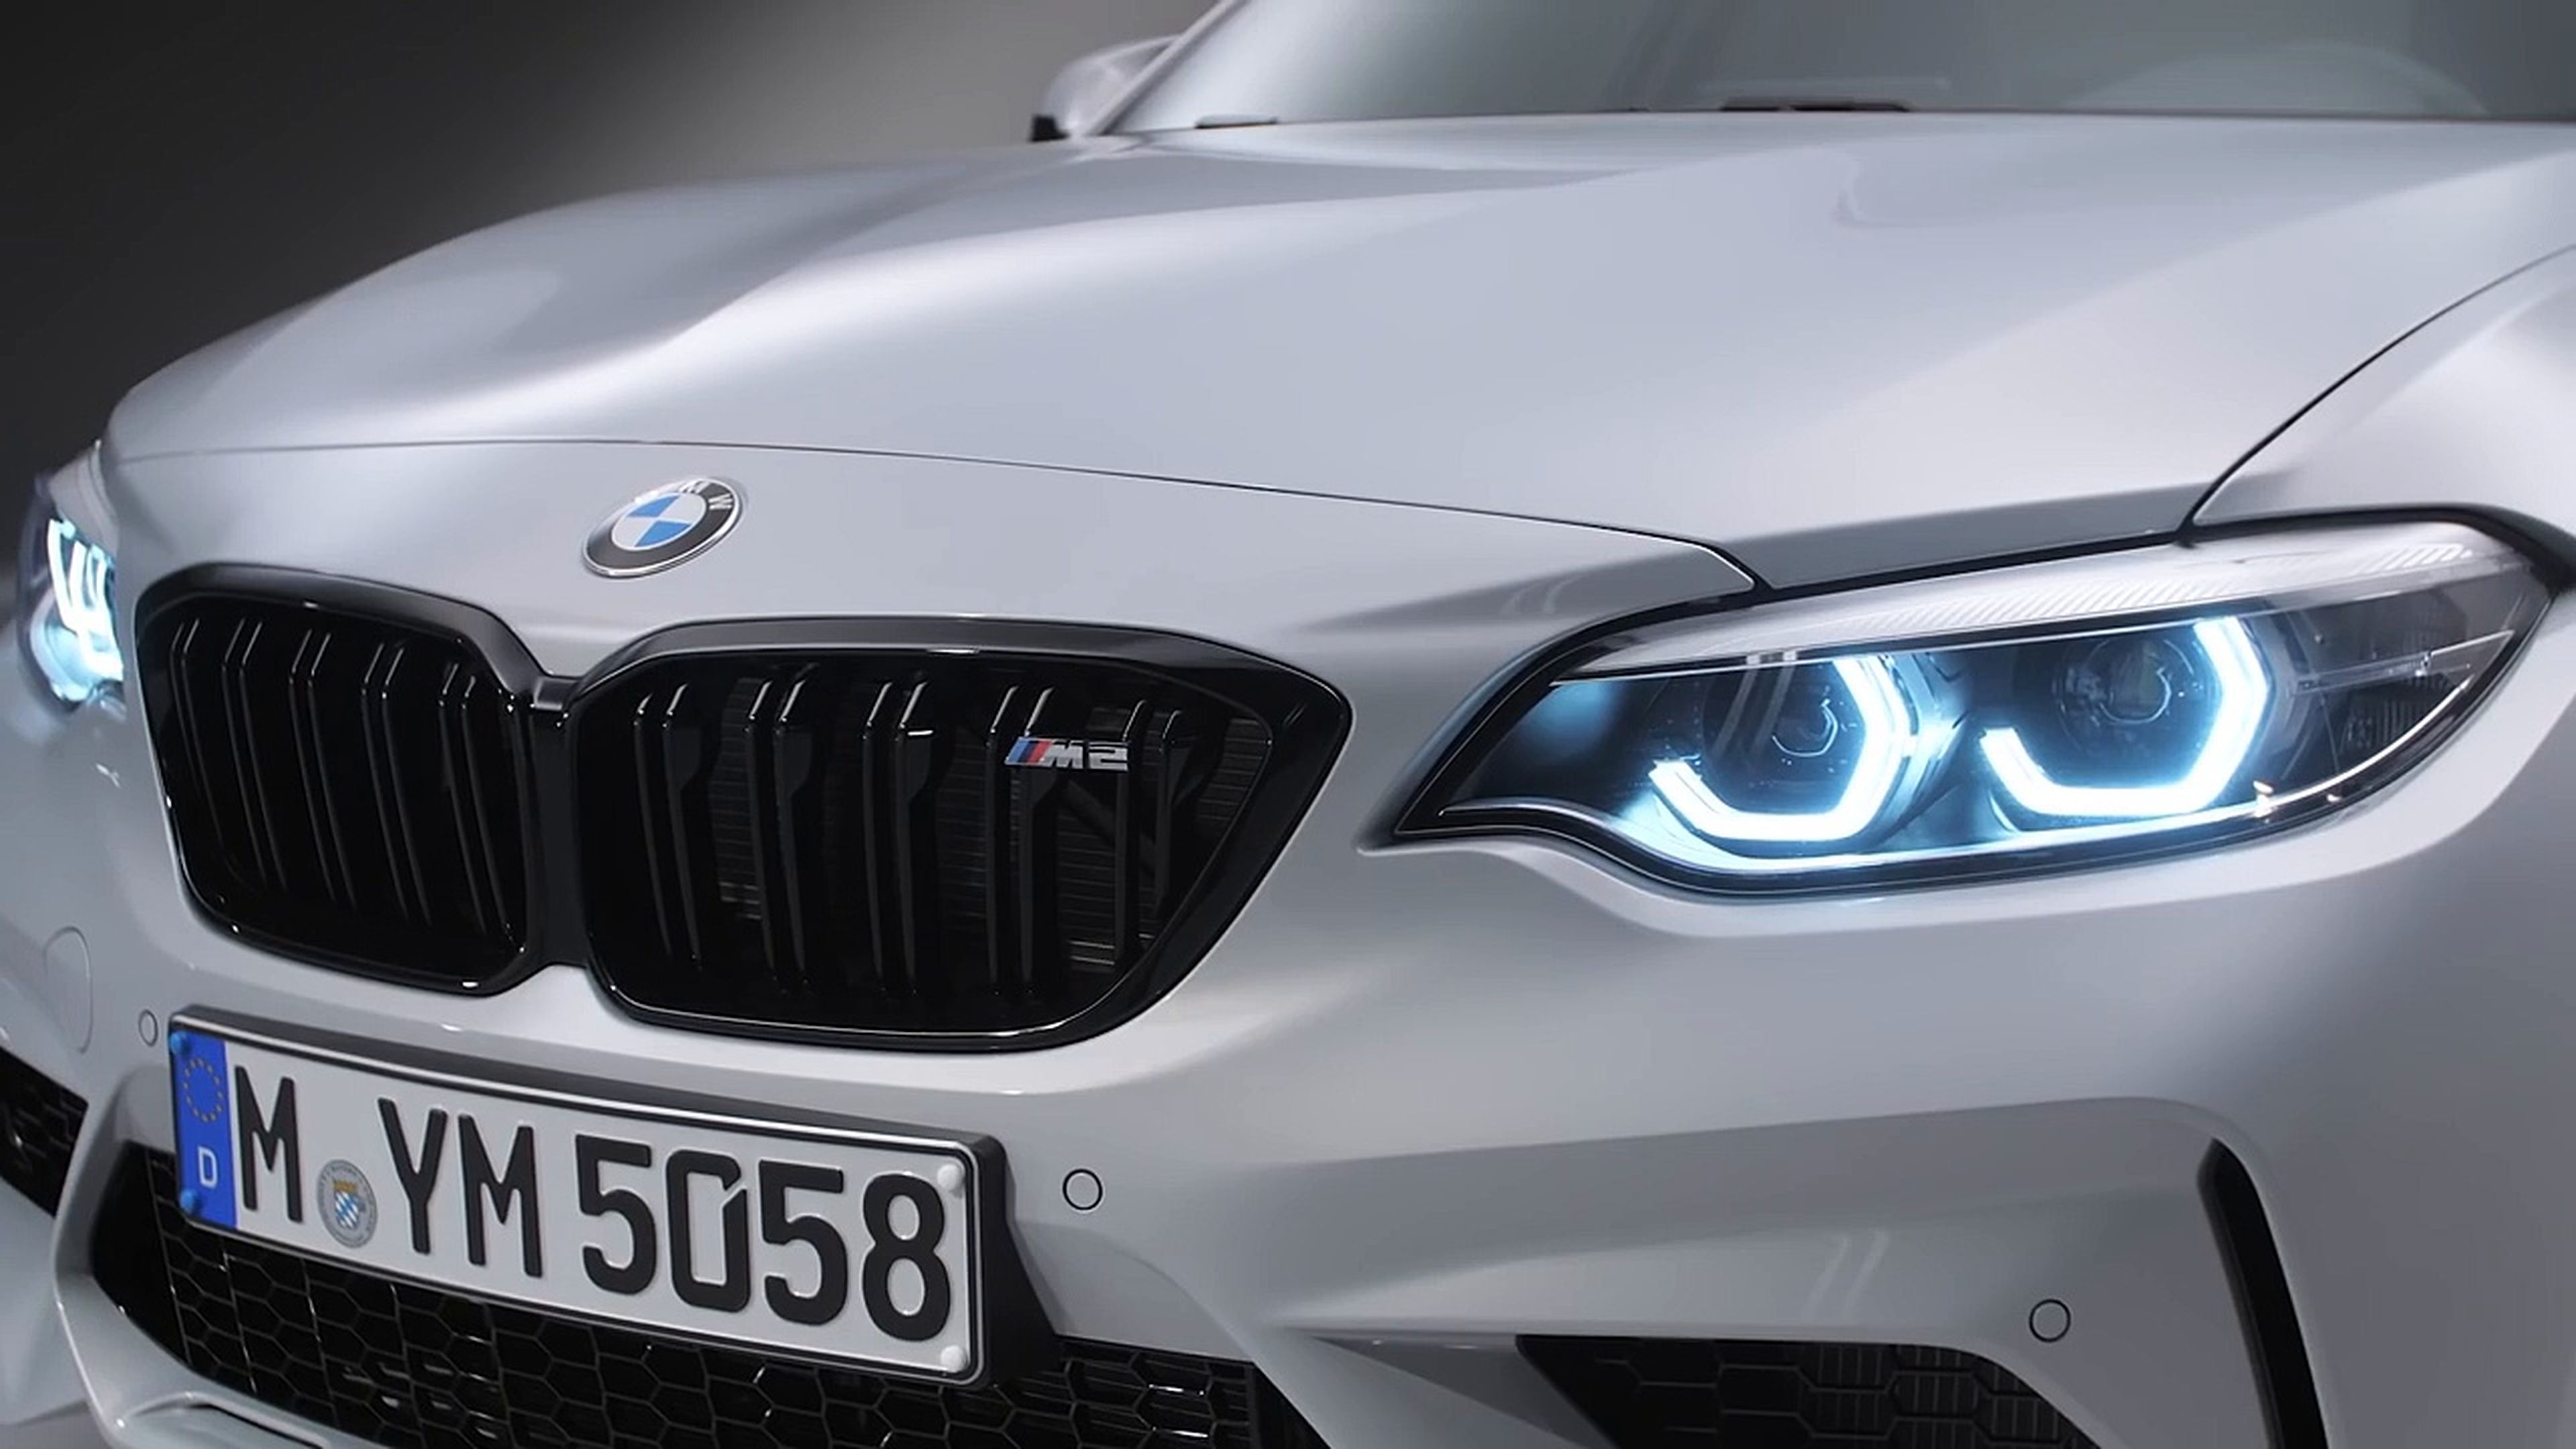 VÍDEO: BMW M2 Competition, analízalo con todo detalle [TG]